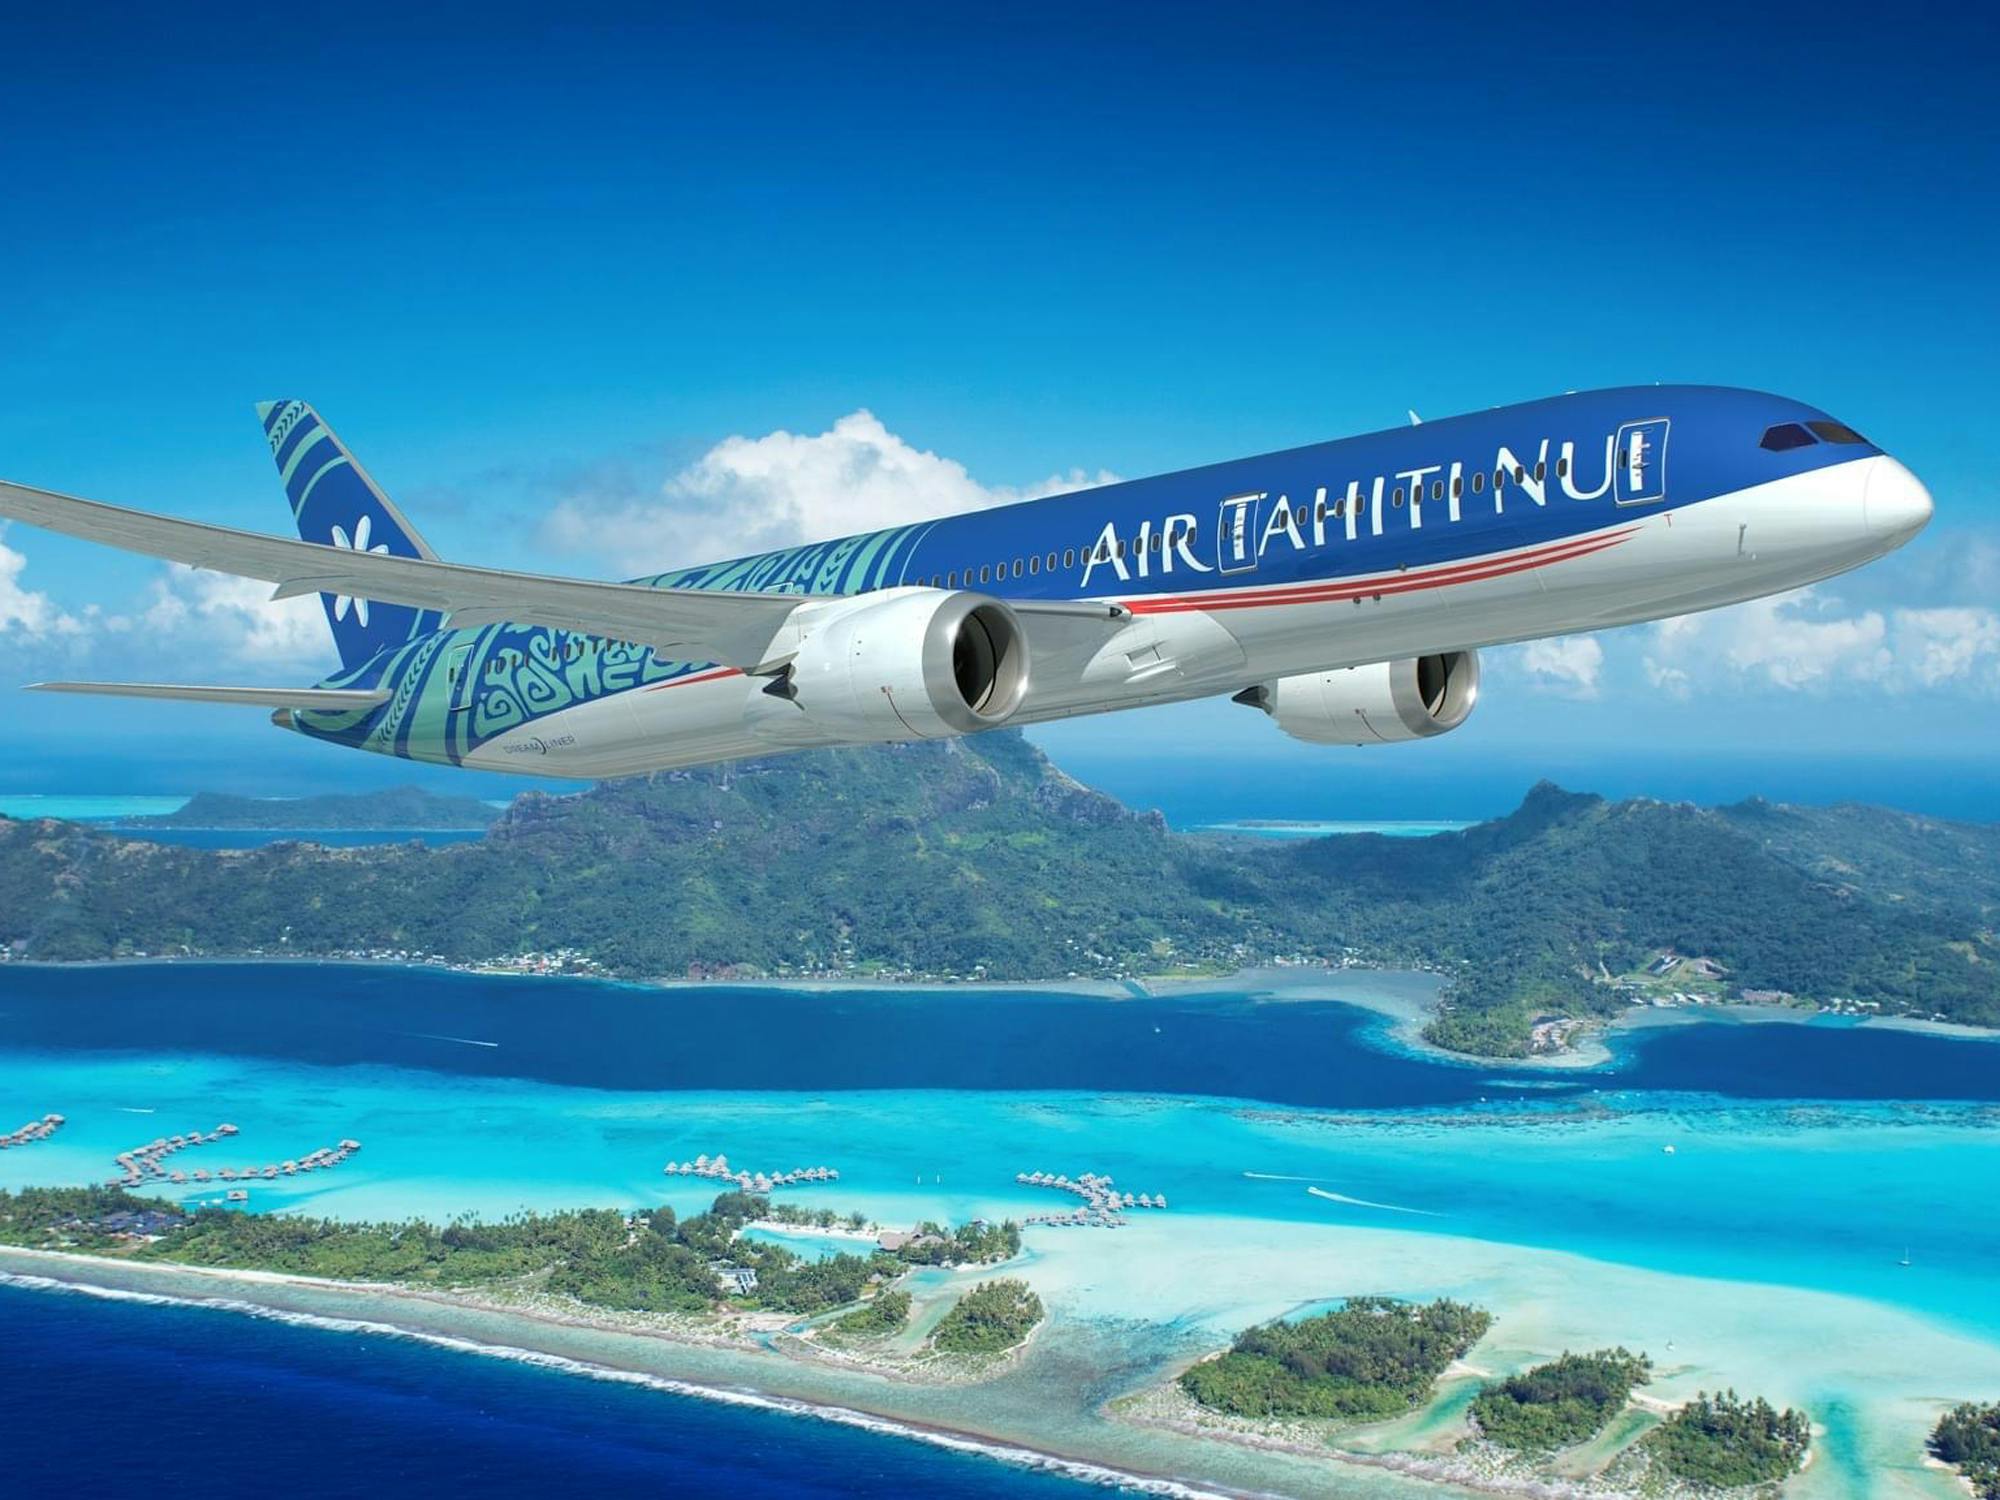 Air Tahiti Nui airplane taking off